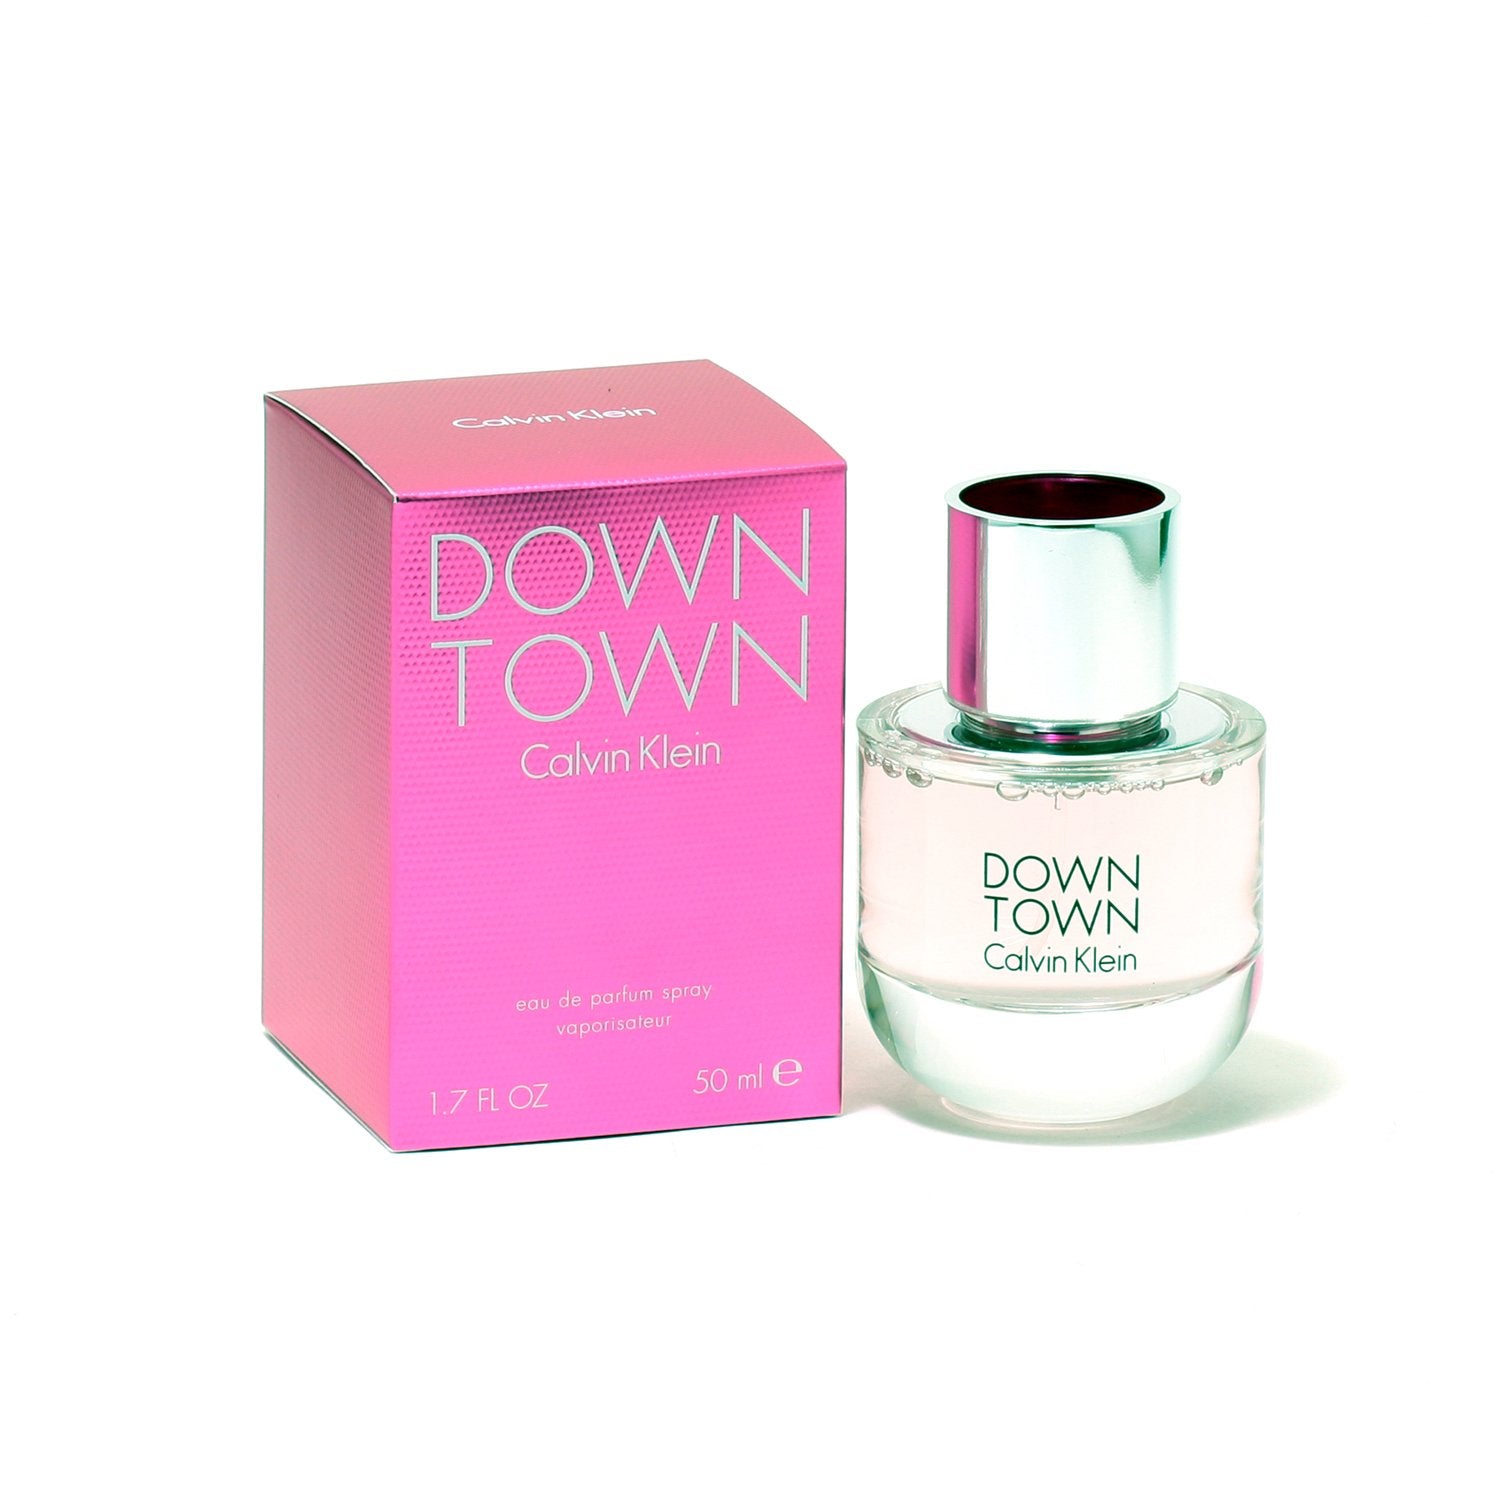 Perfume - CALVIN KLEIN DOWNTOWN FOR WOMEN - EAU DE PARFUM SPRAY